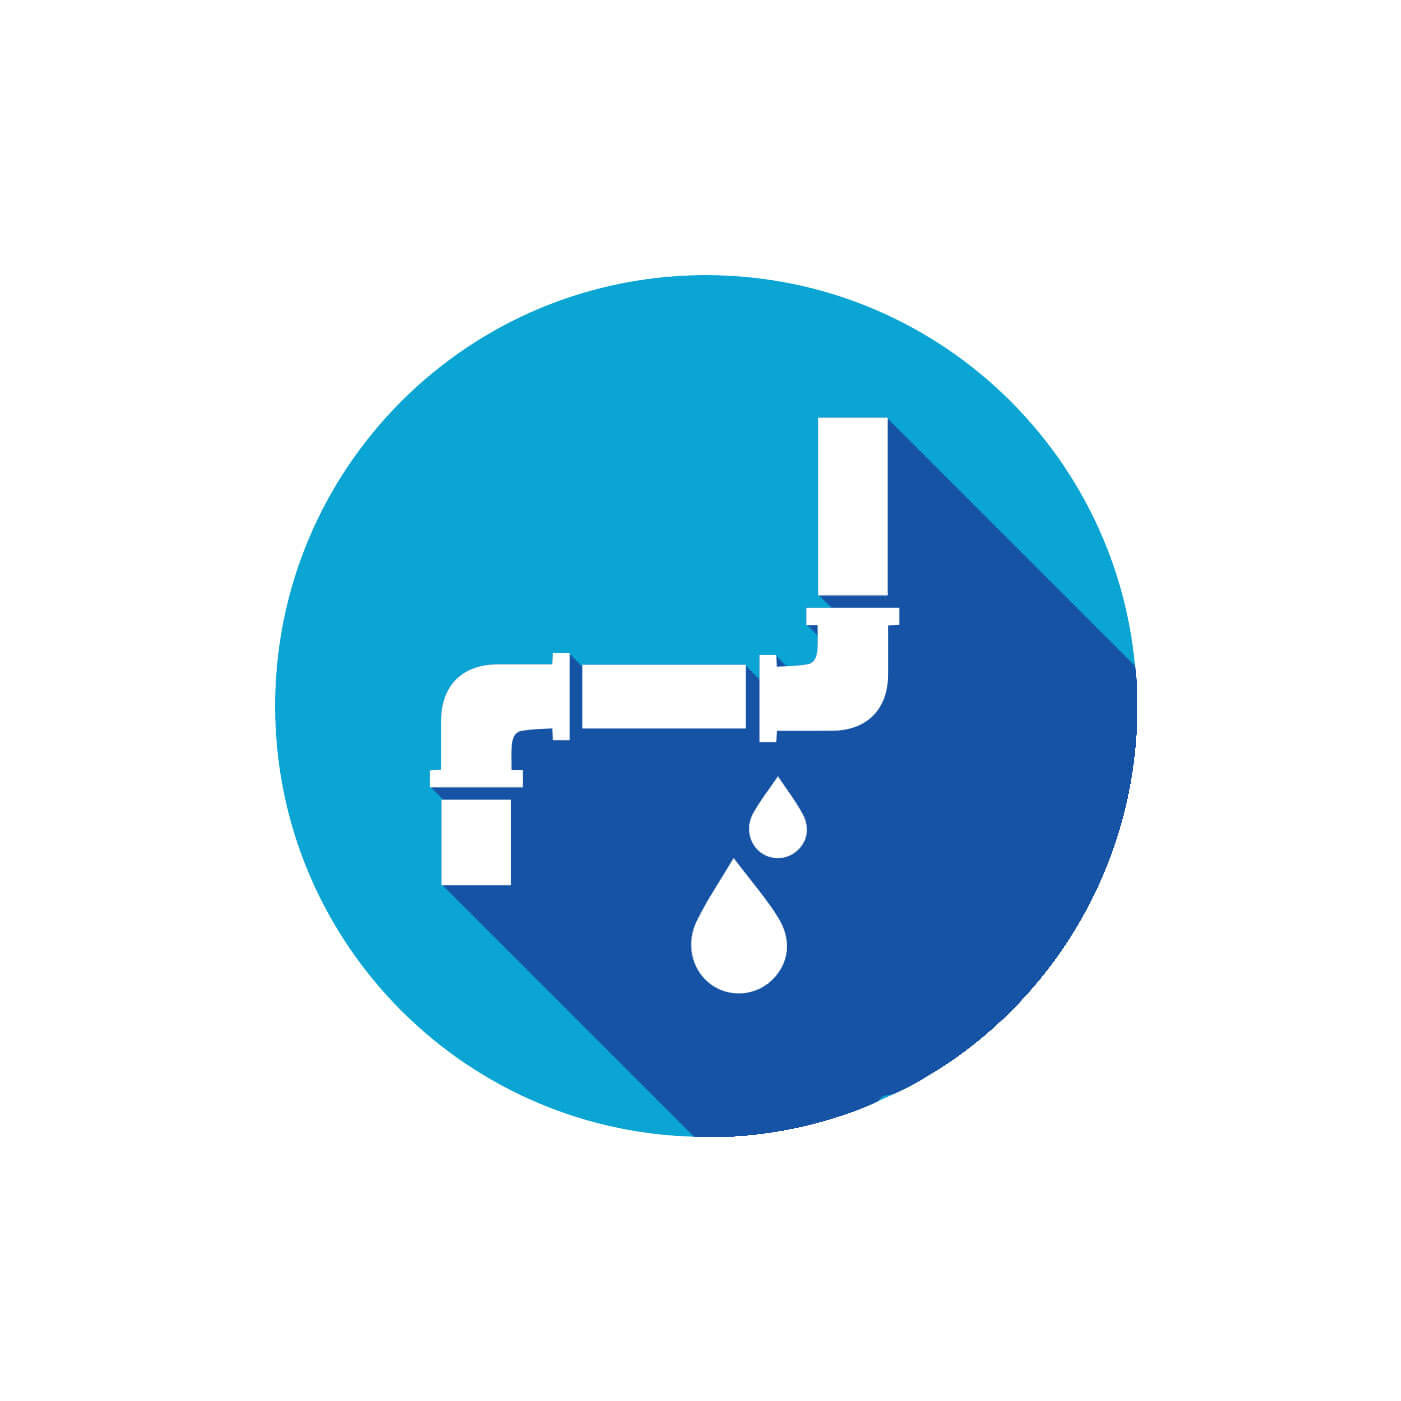 Water supply leak detection